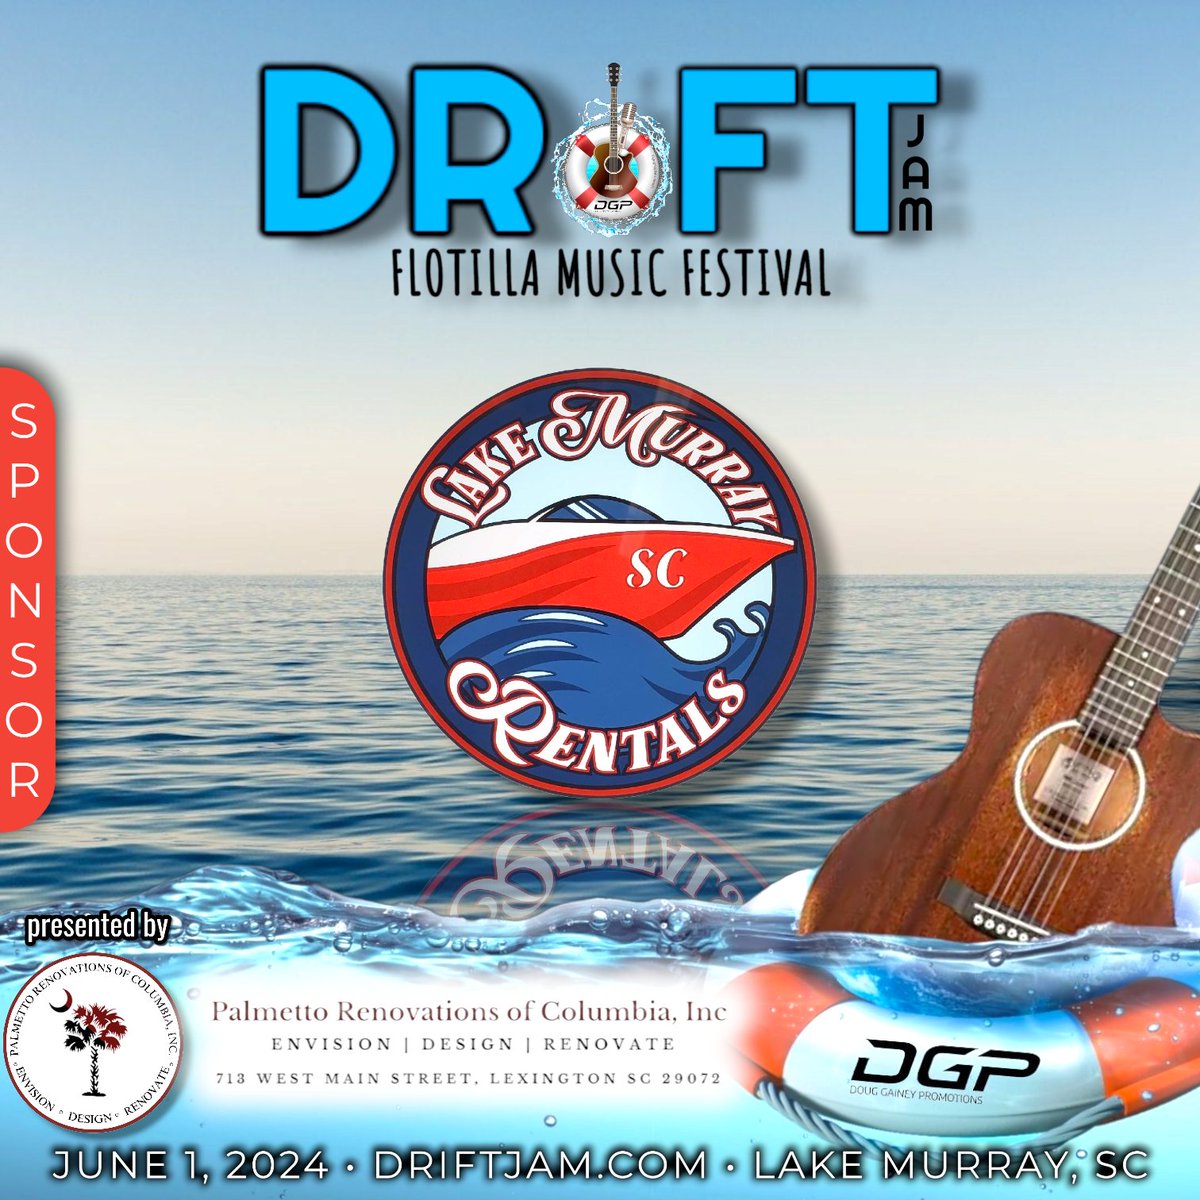 #sponsored ➡️ Lake Murray SC Rentals 
.
.
#driftjam #driftjam2024 #FloatingFestival #MusicOnWater #FinalYear #SafeSailing #MusicCharity #LastChance #FOMO #BoatLife #LastCallOnTheLake